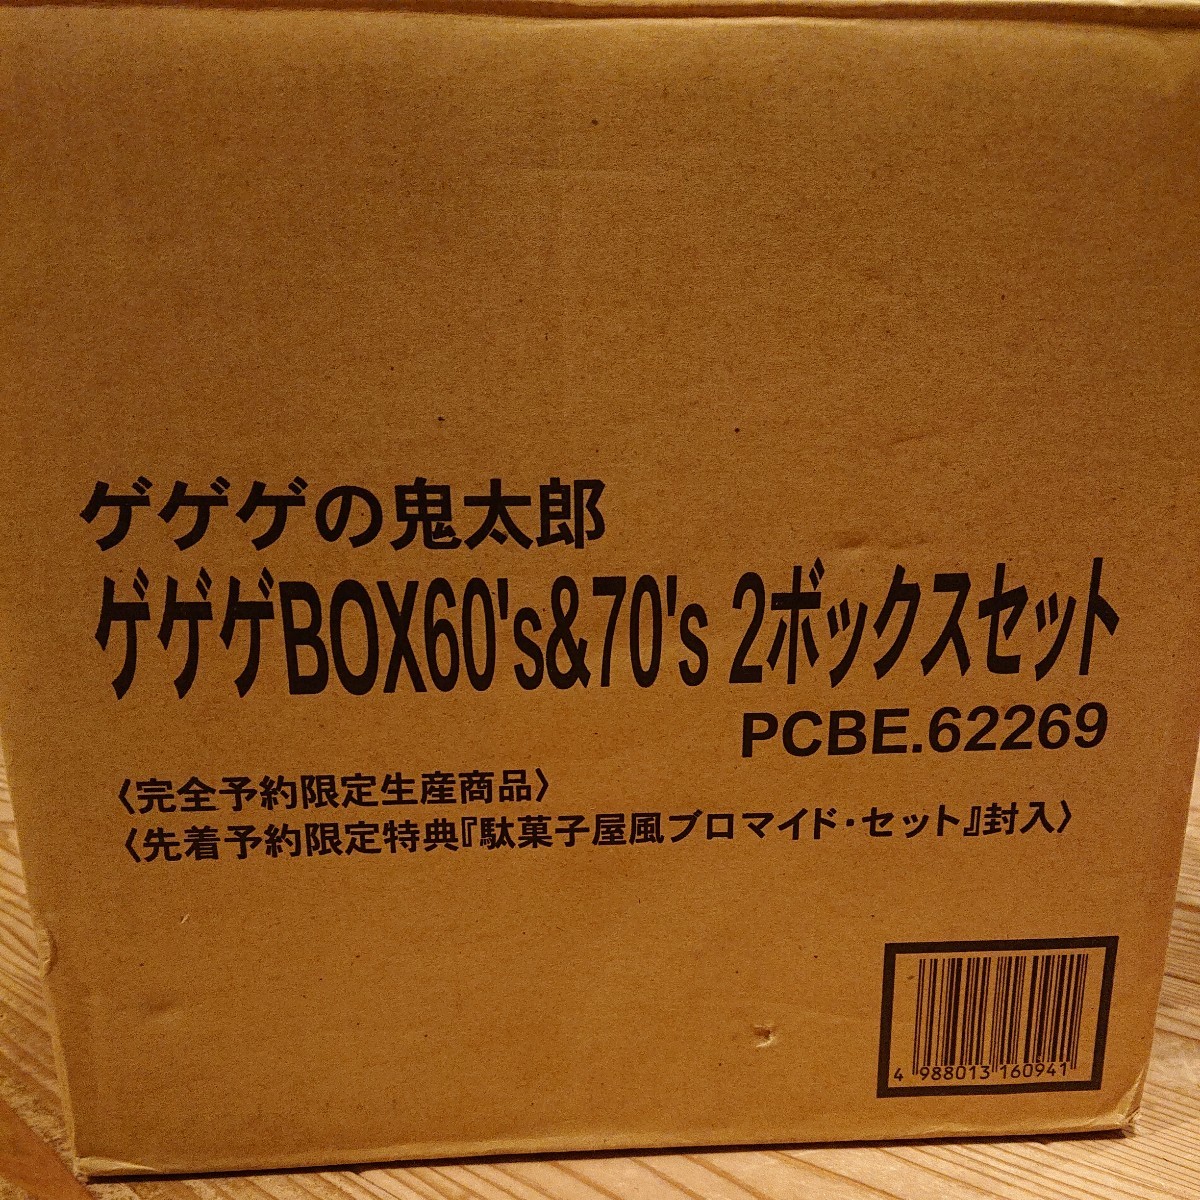 DVD、付録 未開封 完全限定生産 DVD ゲゲゲの鬼太郎 ゲゲゲBOX60's&70's 2ボックスセット - 6